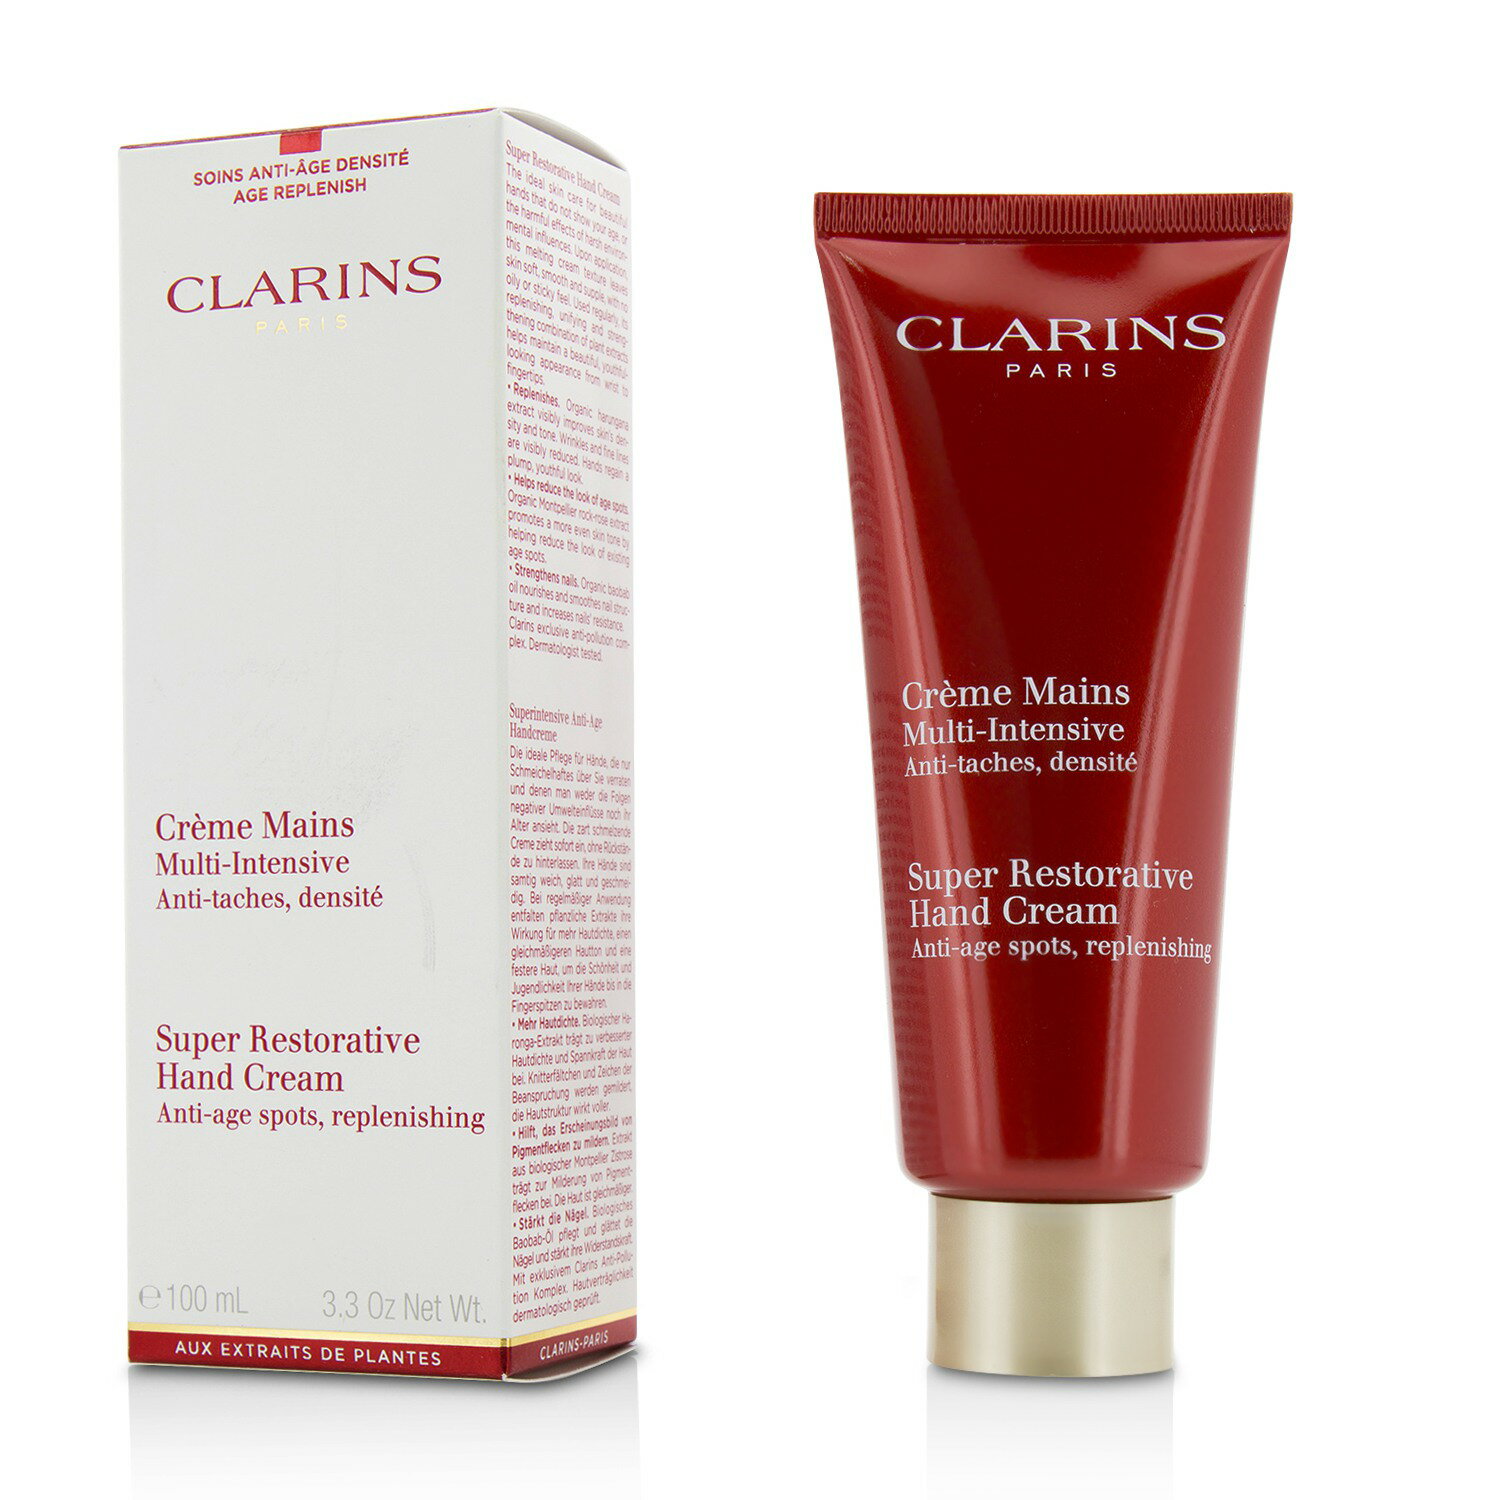 克蘭詩 Clarins - 極緻活齡護手霜 Super Restorative Hand Cream